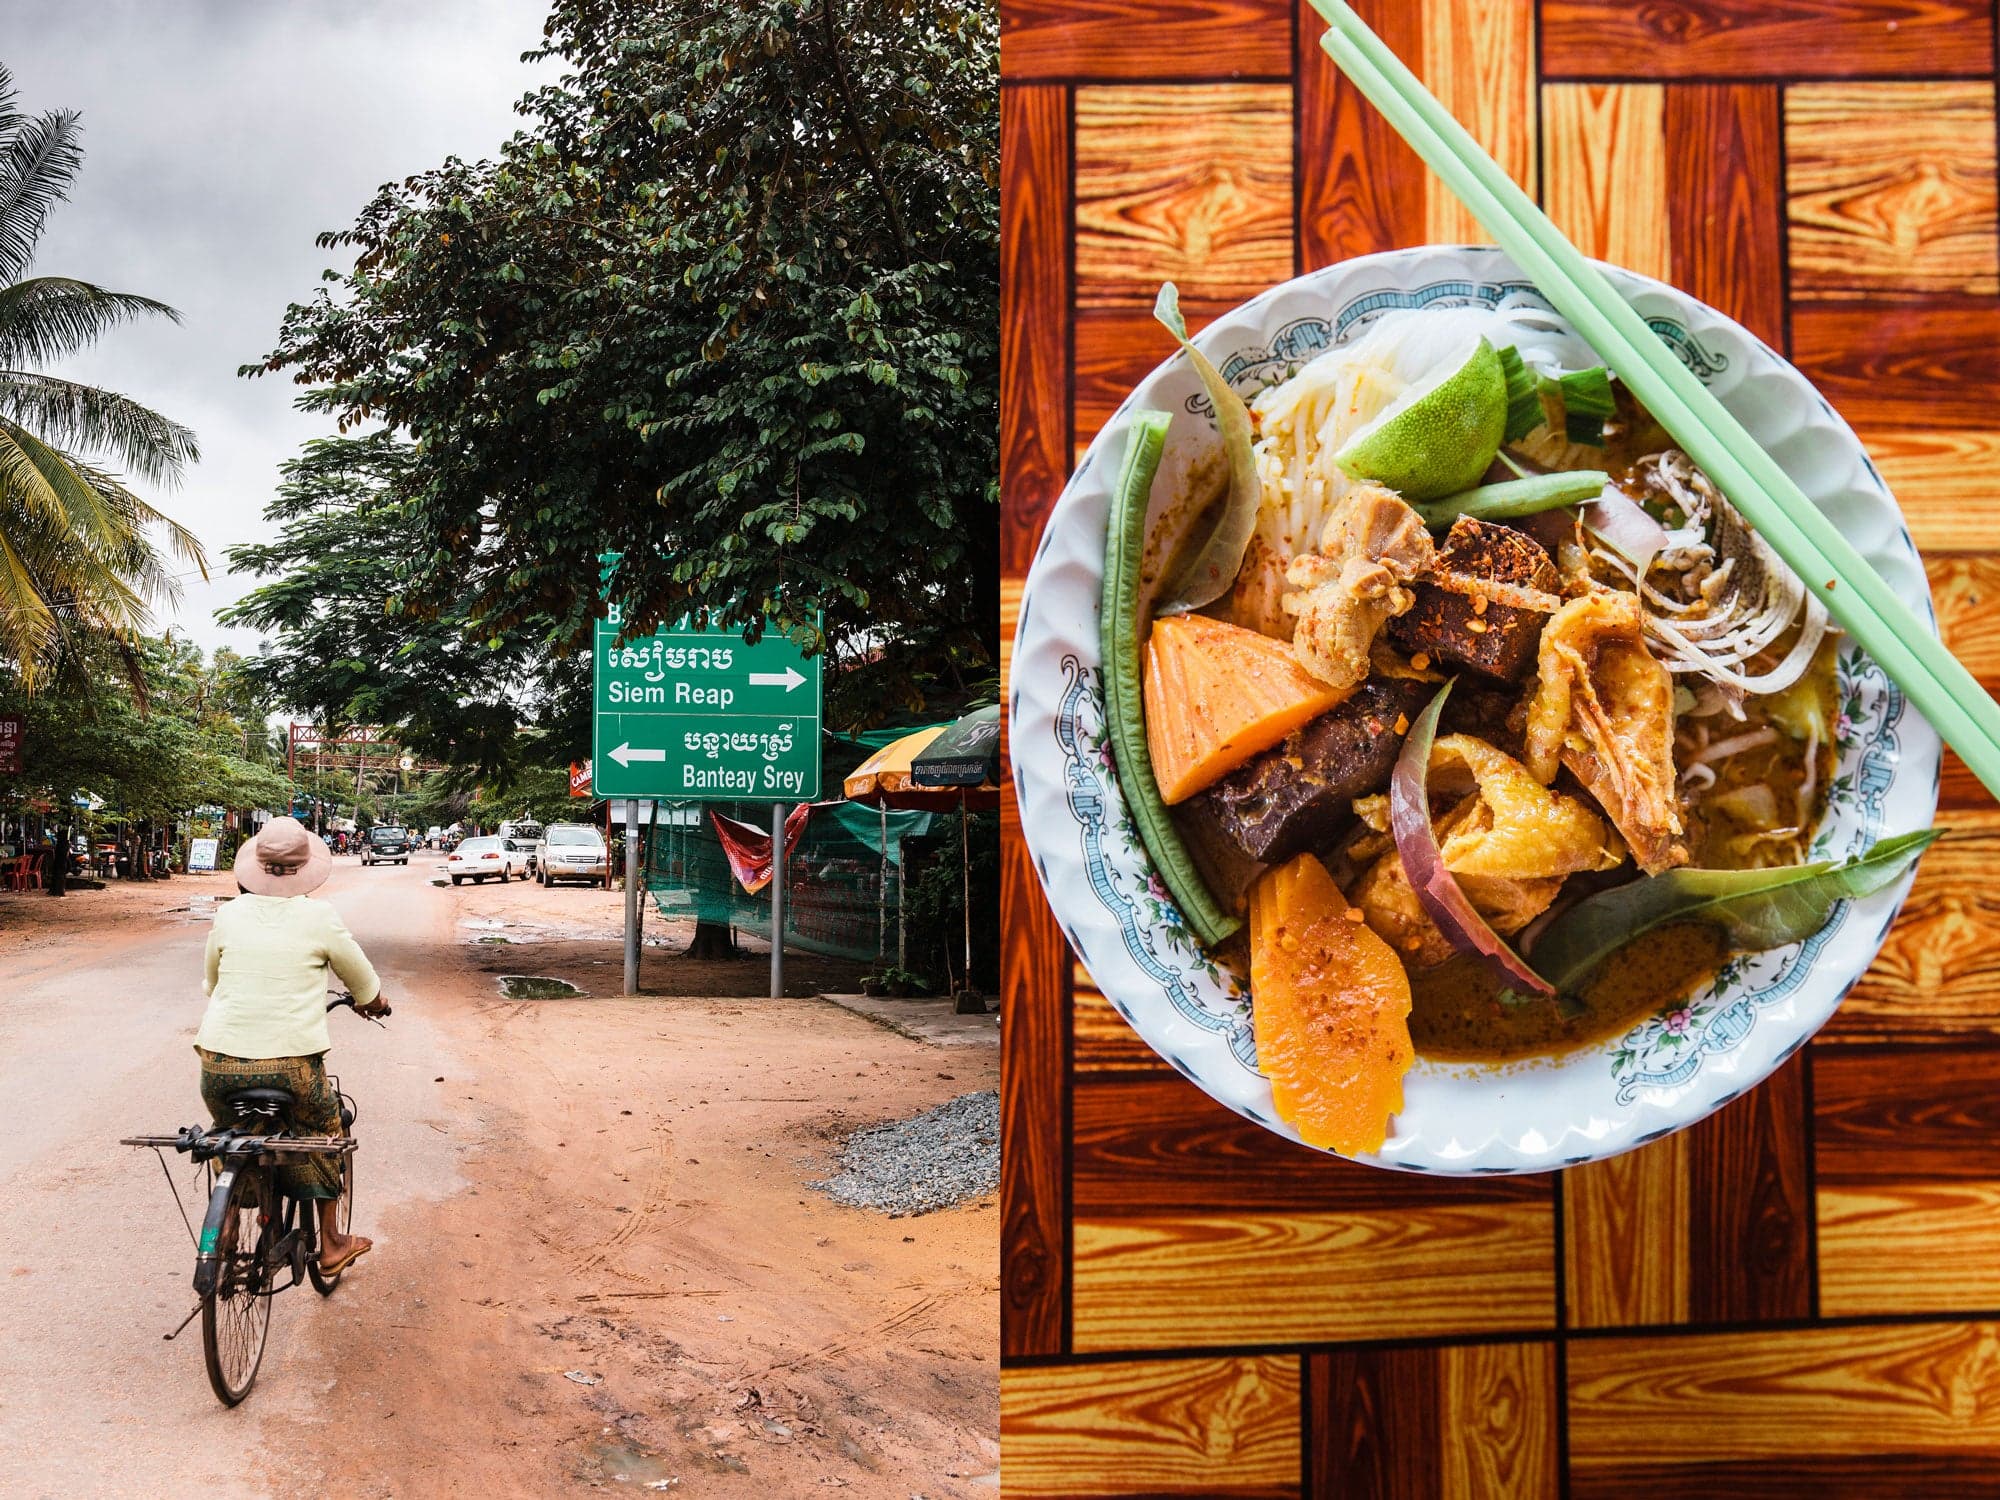 City Limits, Num Banh Chok; Siem Reap, Cambodia